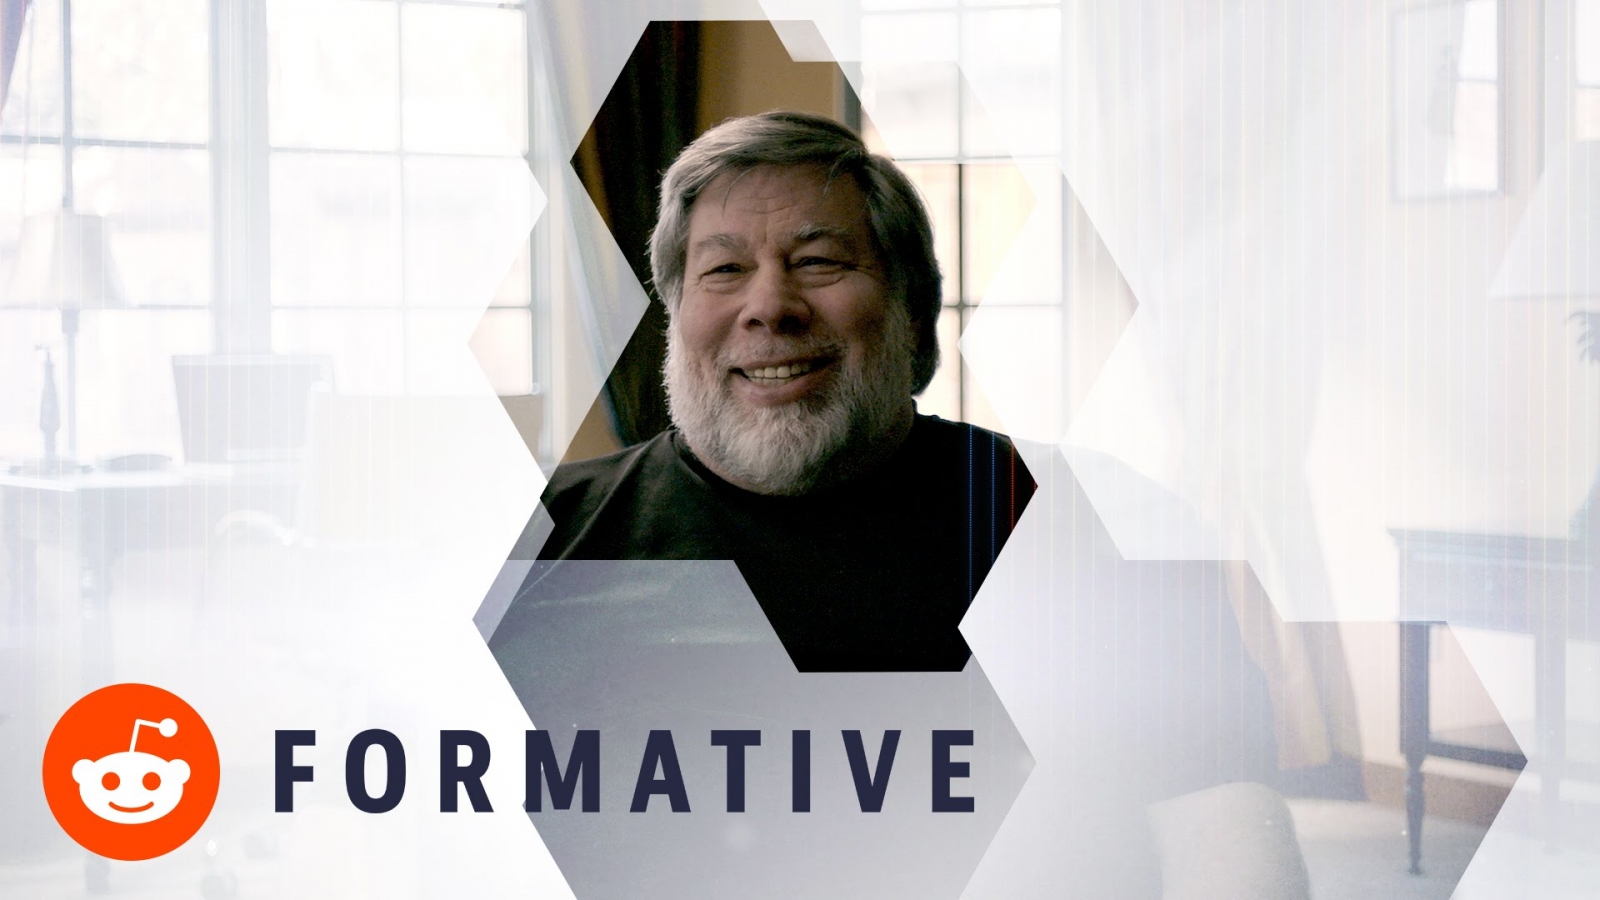 Steve Wozniak’s Formative Moment